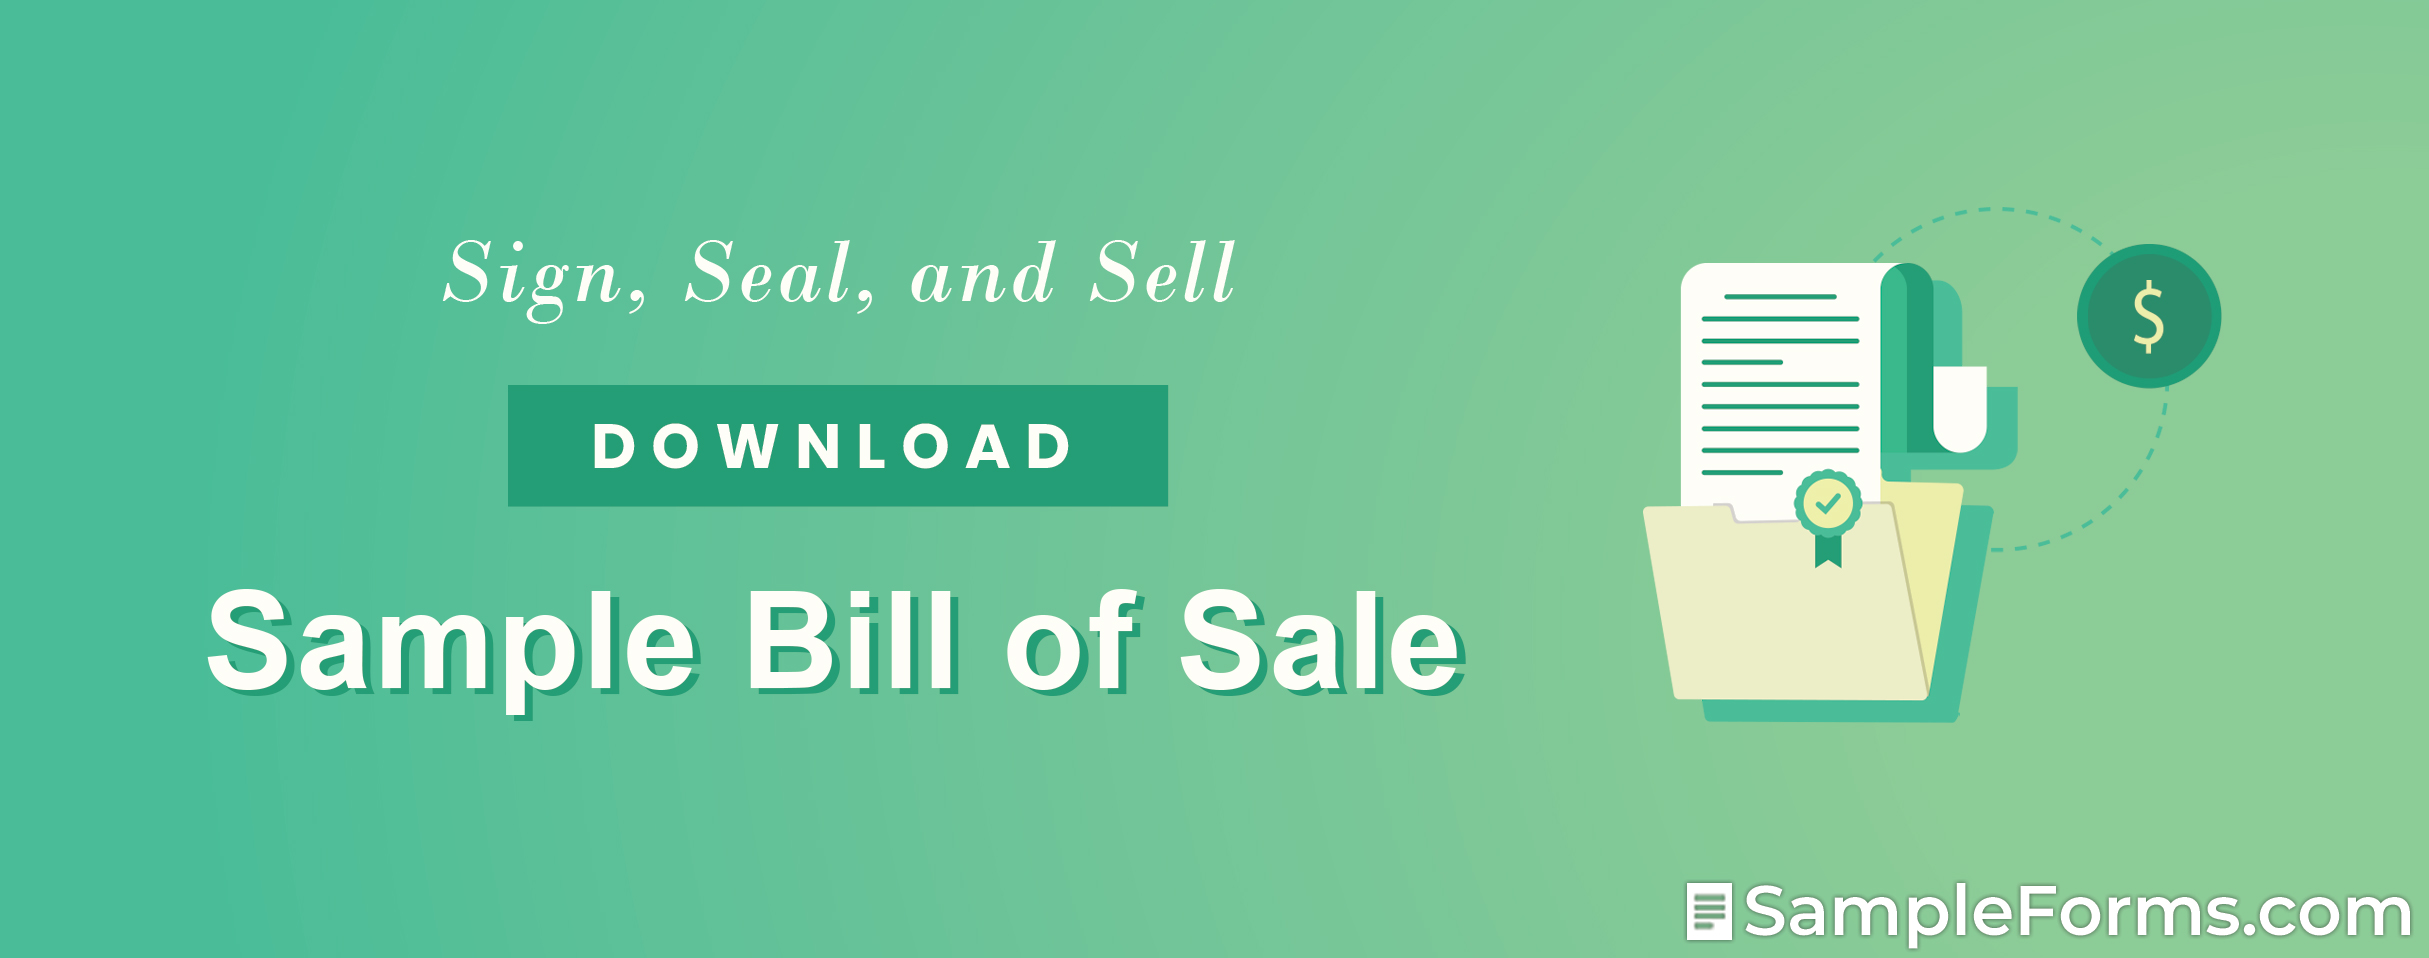 Sample Bill of Sale Form